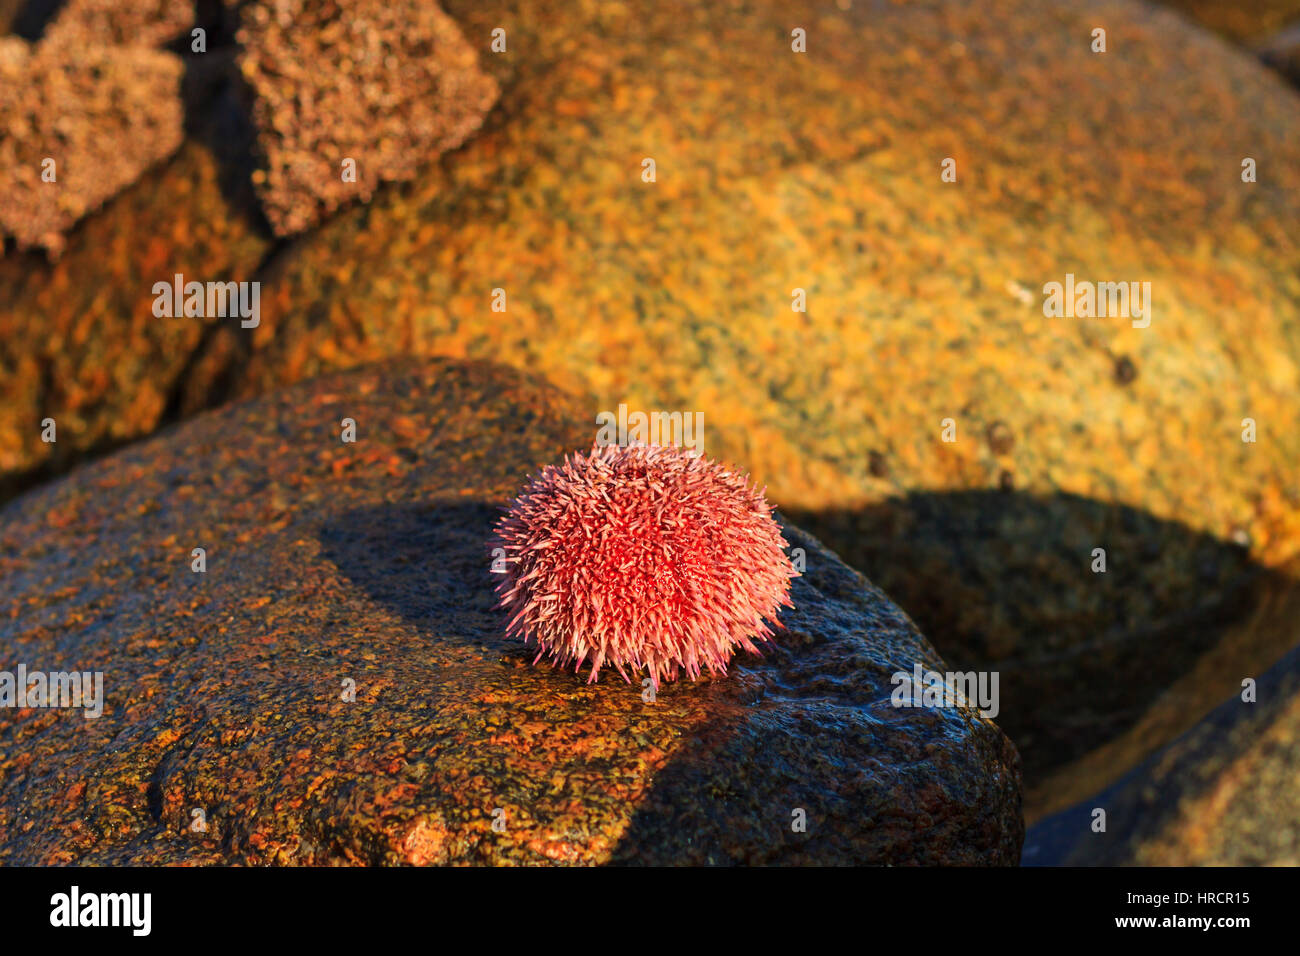 Sea echinus lying on the rocks,Arctic Ocean, Norway, sea, marine inhabitants Stock Photo